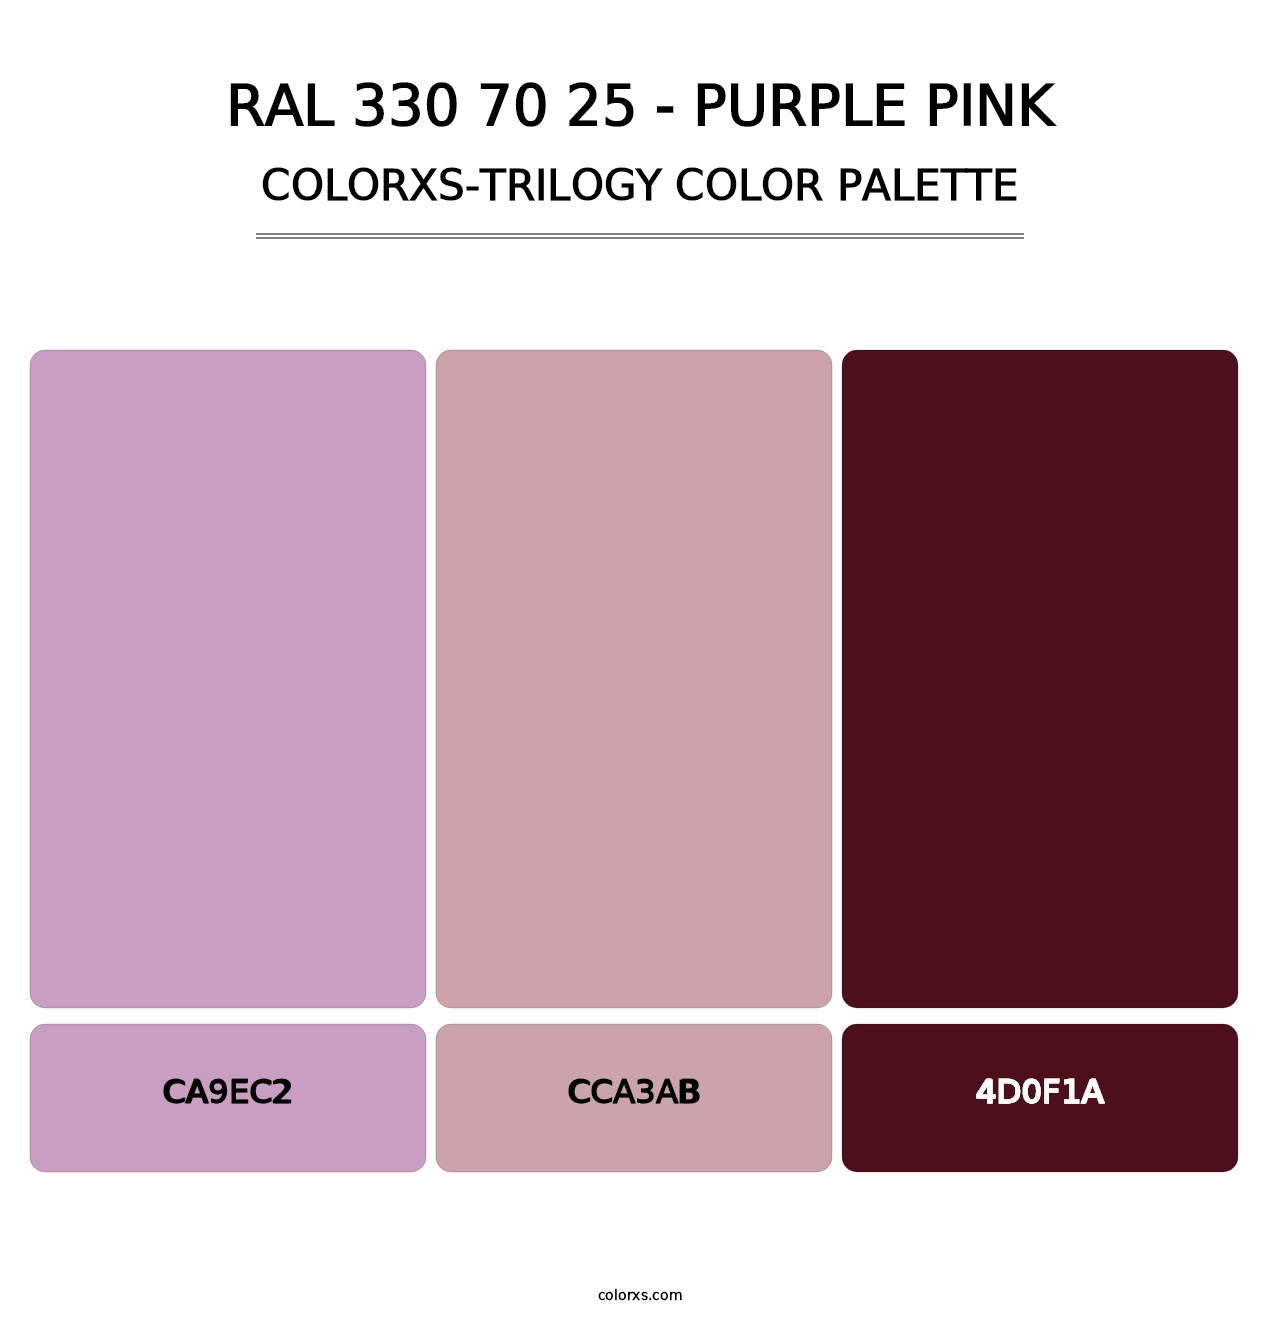 RAL 330 70 25 - Purple Pink - Colorxs Trilogy Palette